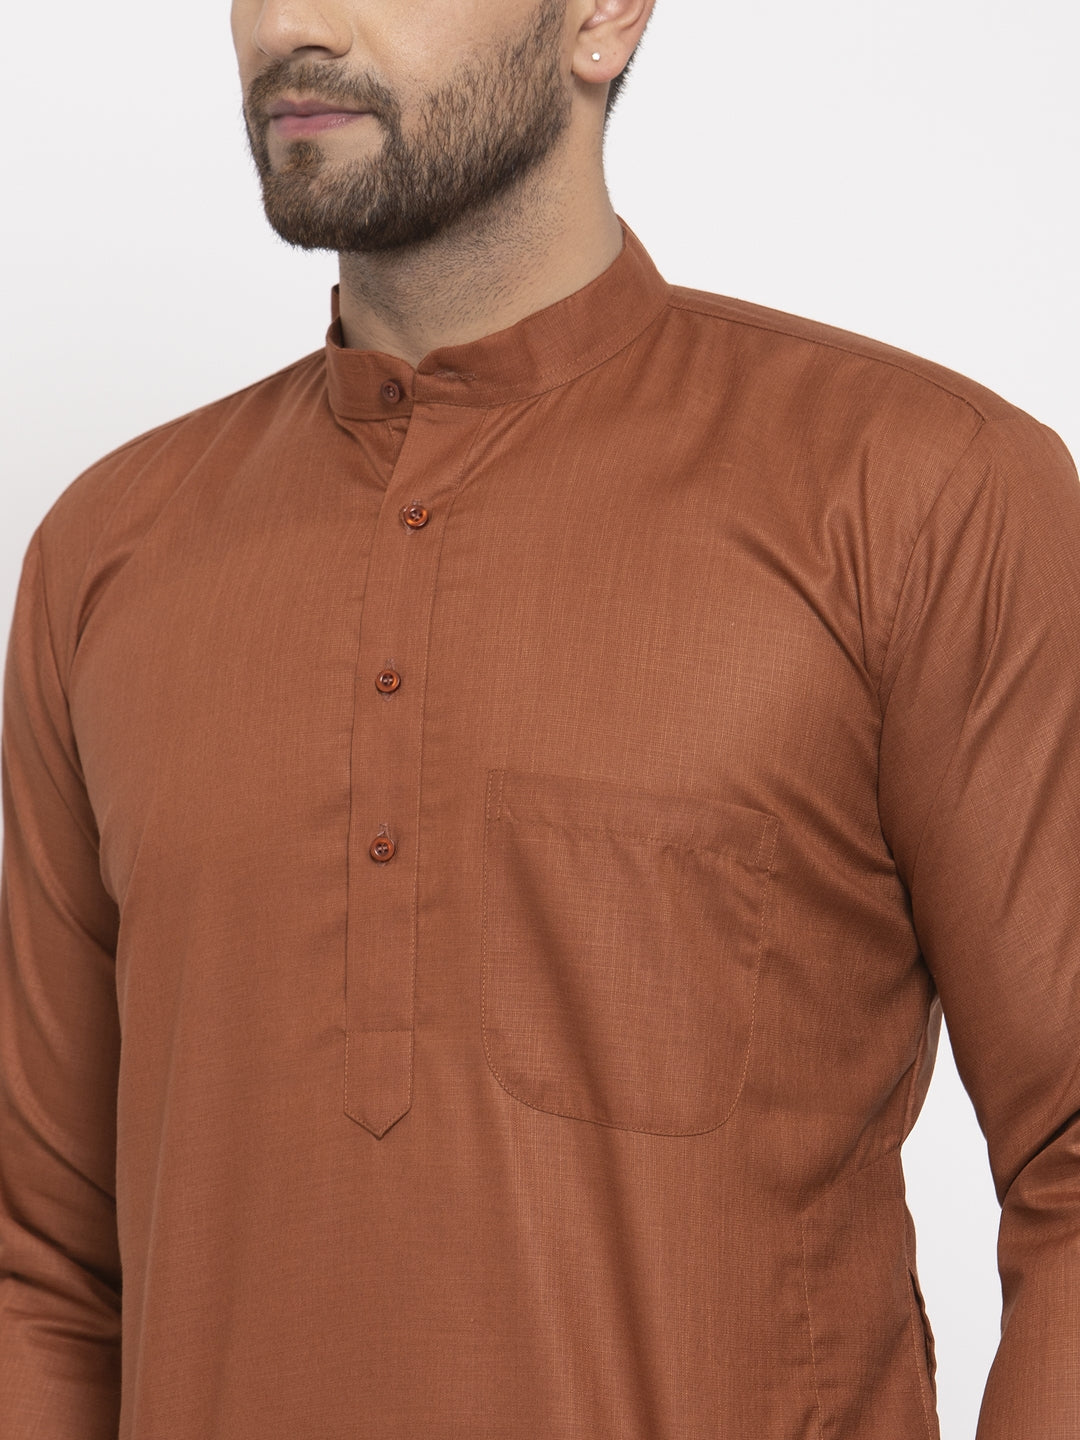 Jompers Men's Brown Cotton Solid Kurta Payjama Sets